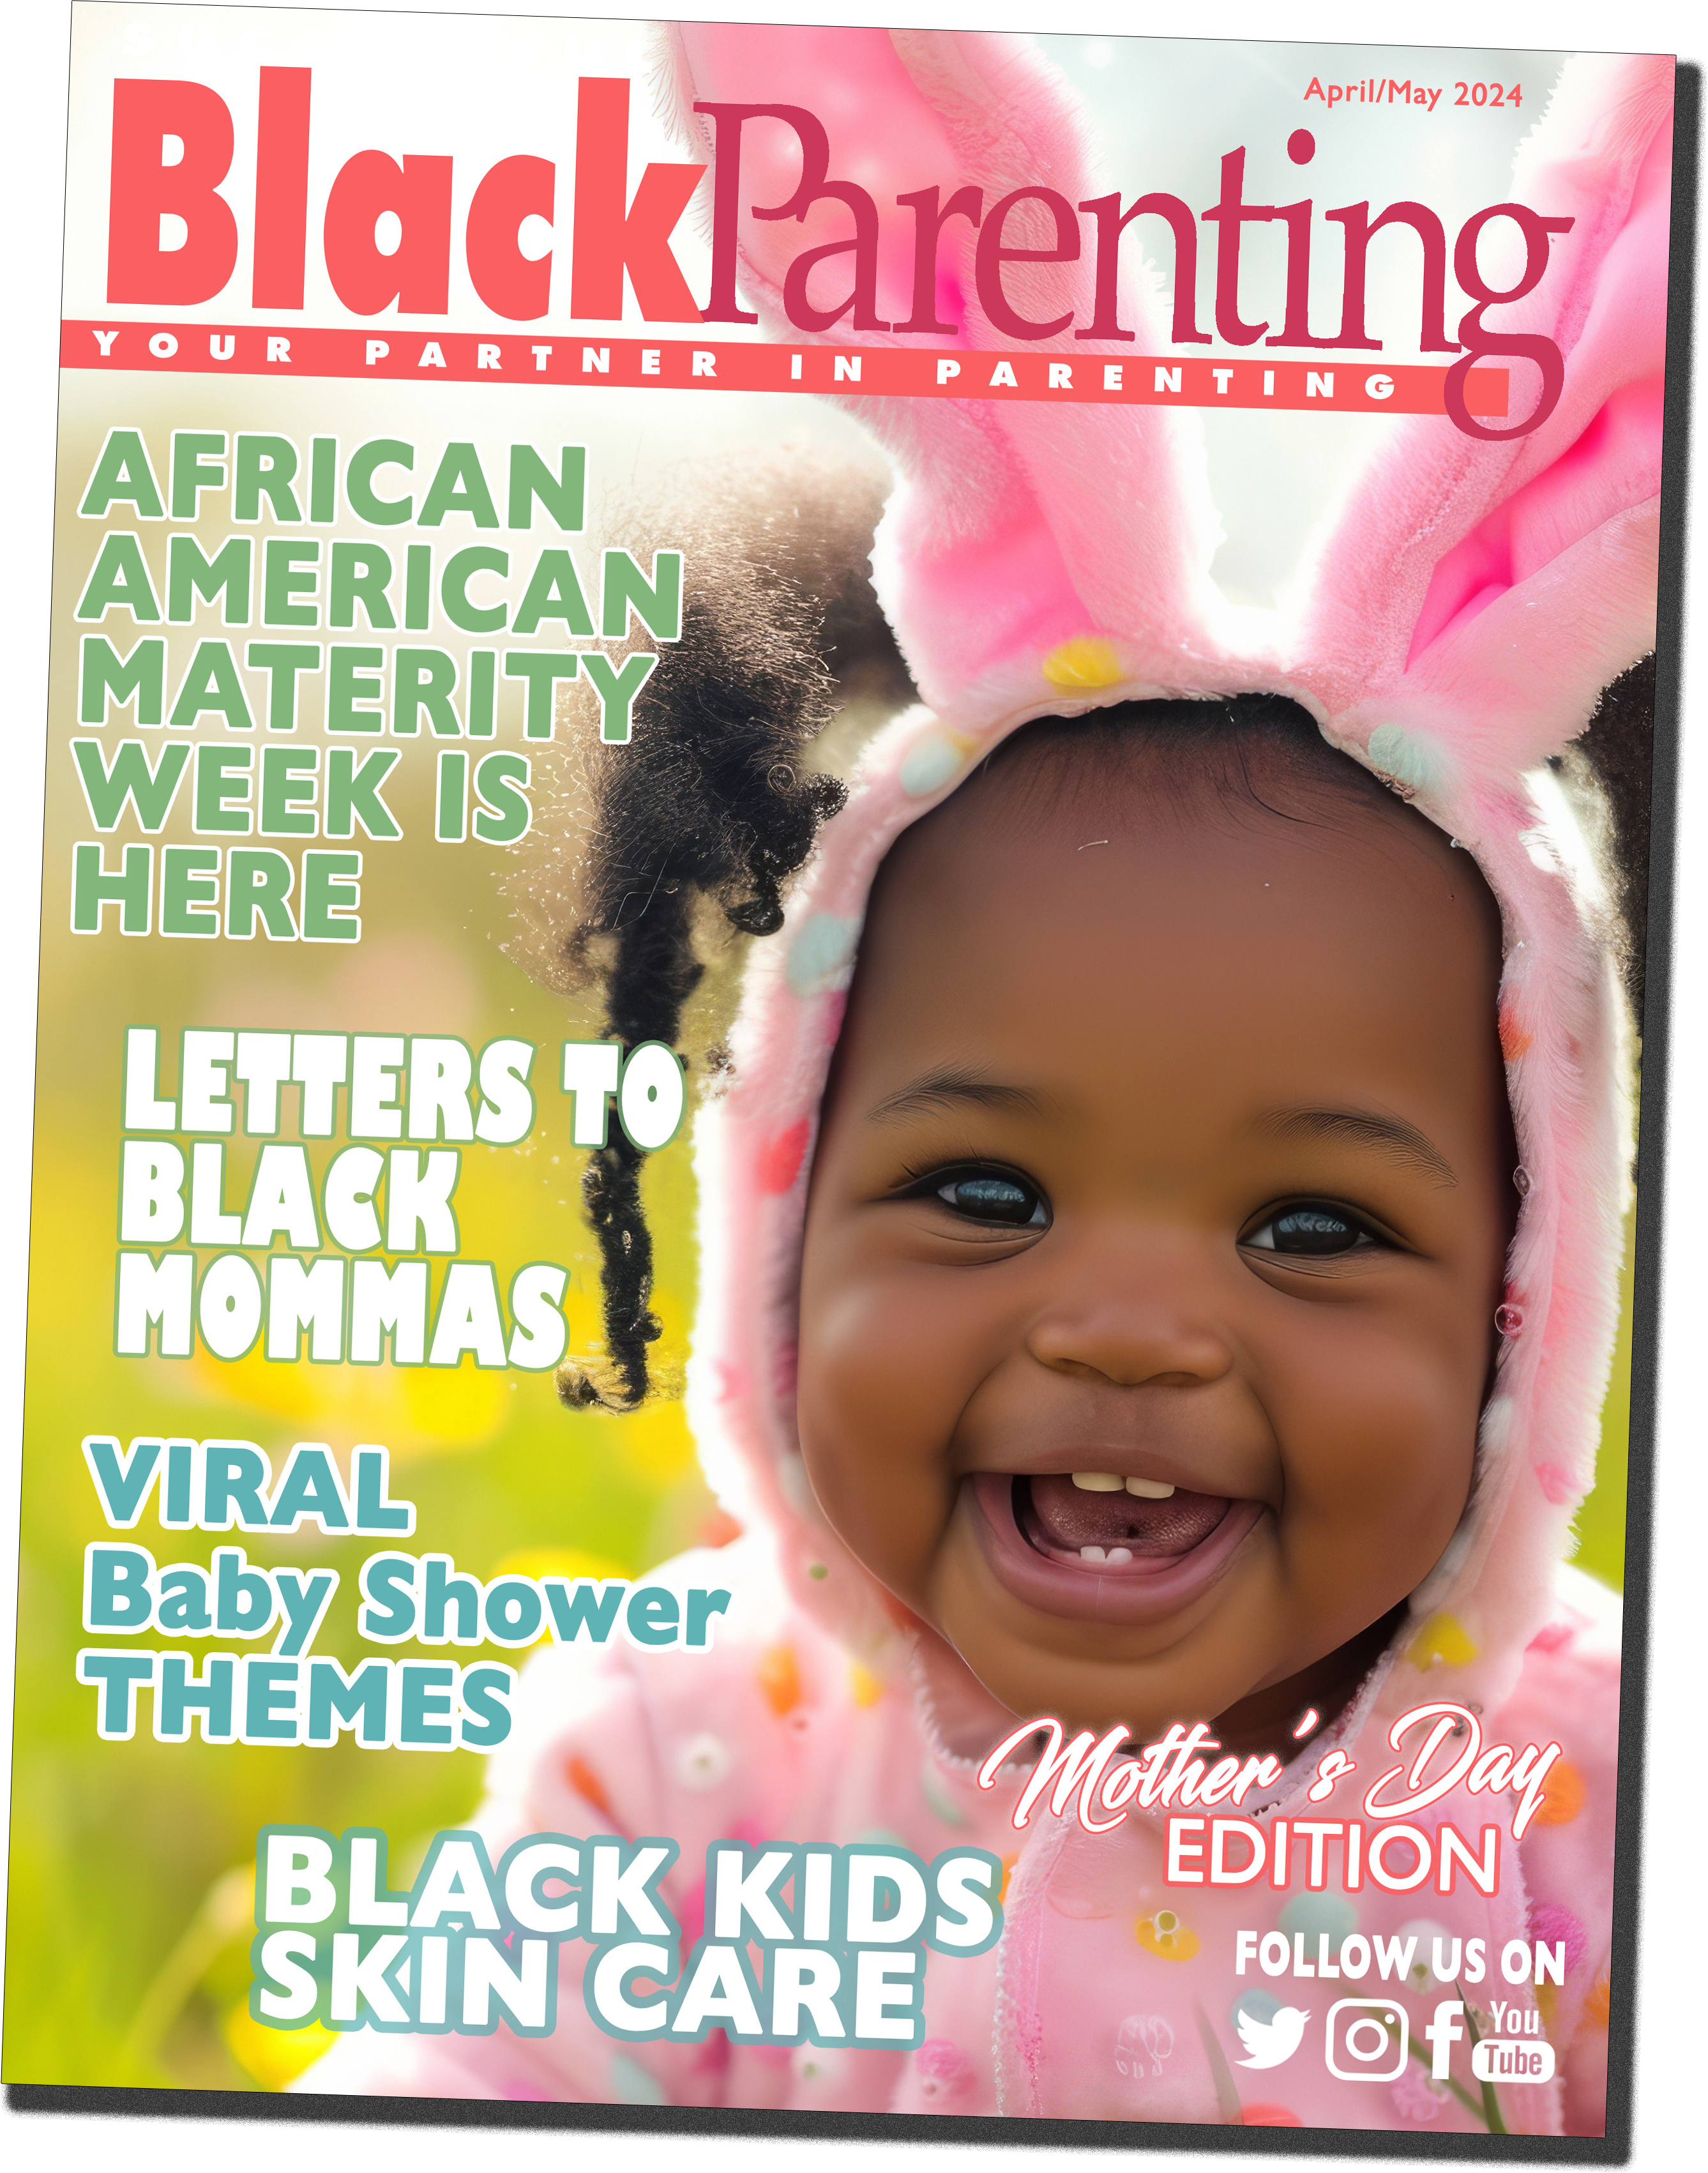 Sbp magazine apr may 2024 cover on successful black parenting magazine